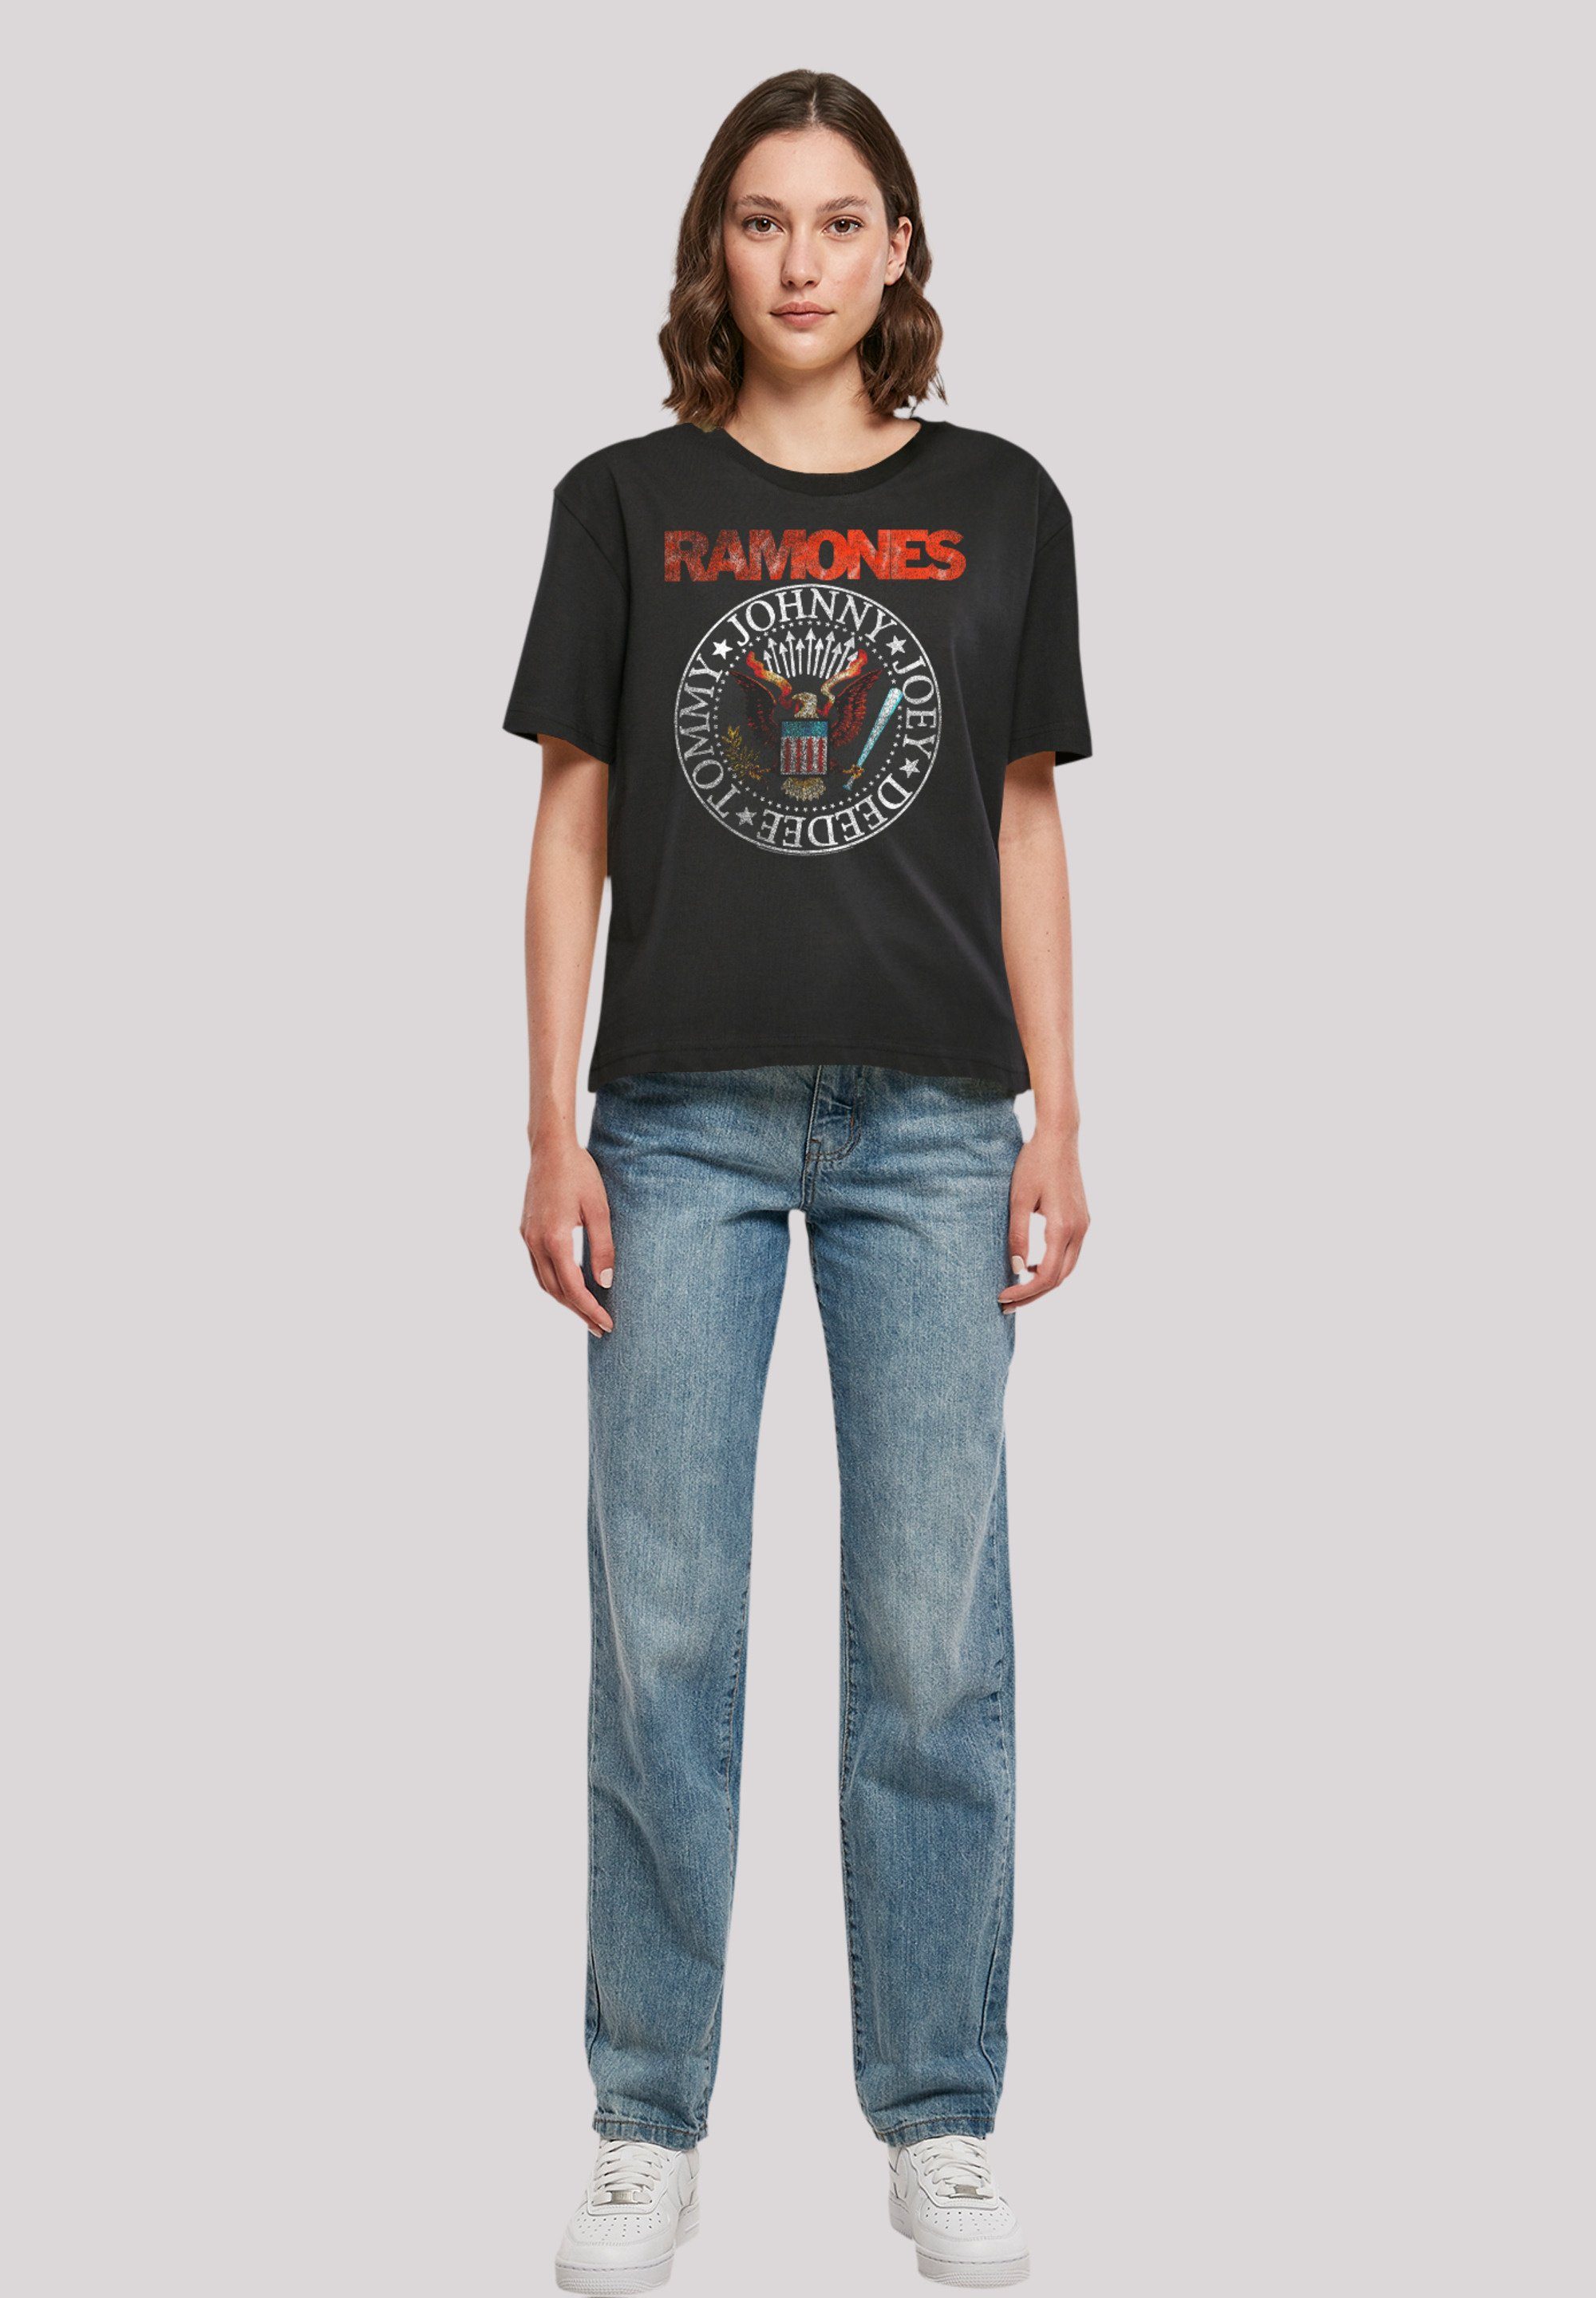 F4NT4STIC T-Shirt Ramones Band EAGLE Rock-Musik Band, VINTAGE Musik Rock SEAL Premium Qualität